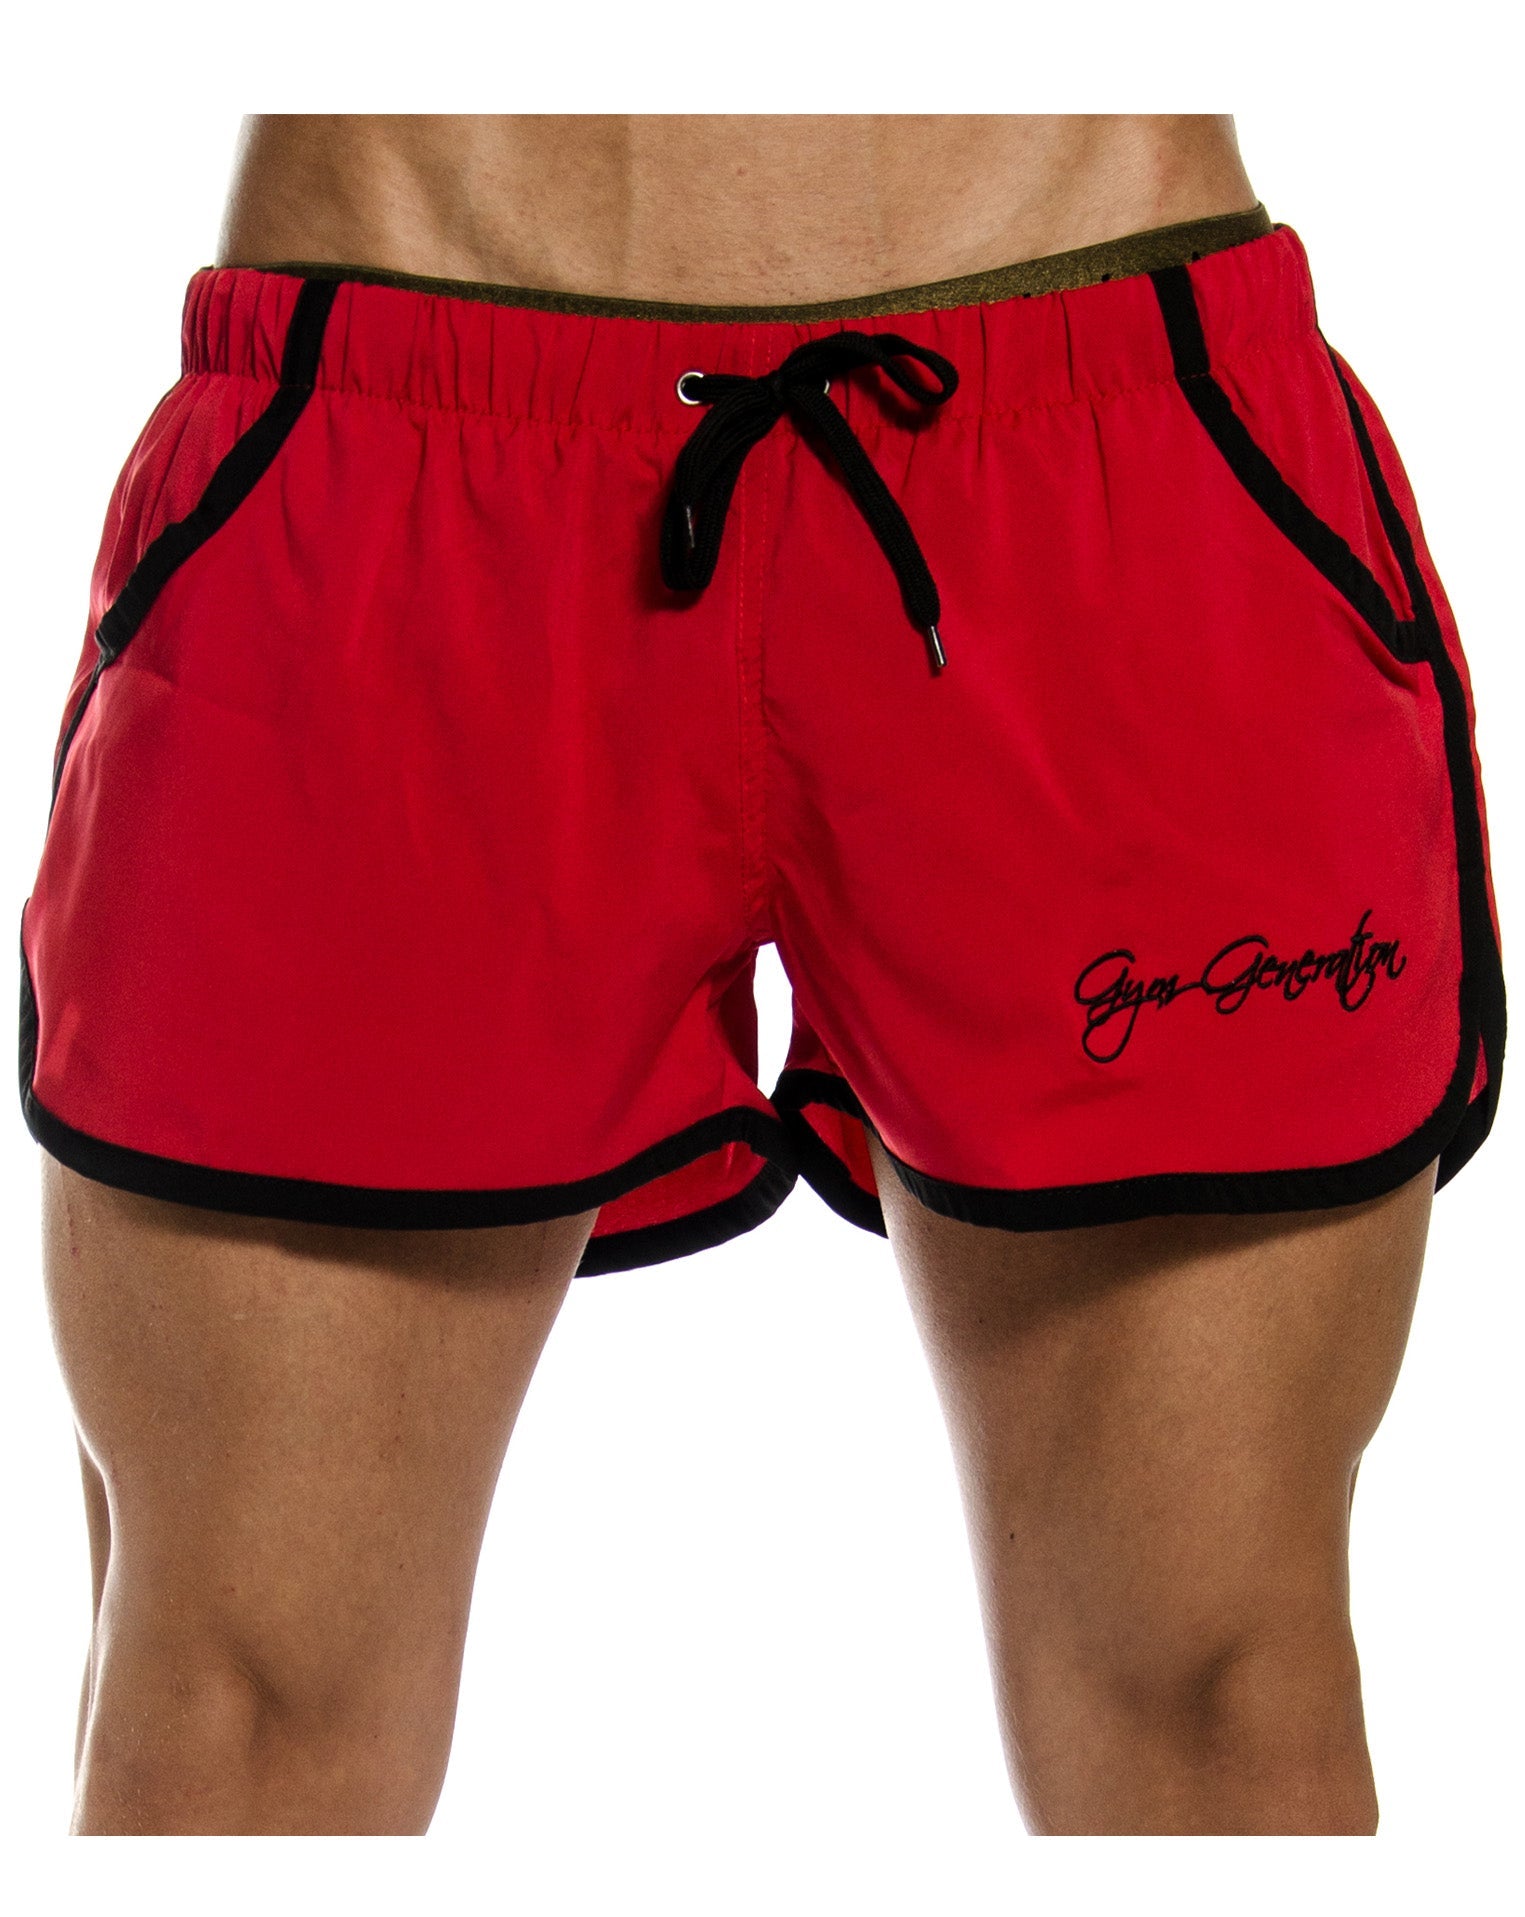 Pantalones cortos deportivos para | Pantalón corto sport rojo pantalones cortos Zyzz – Gym